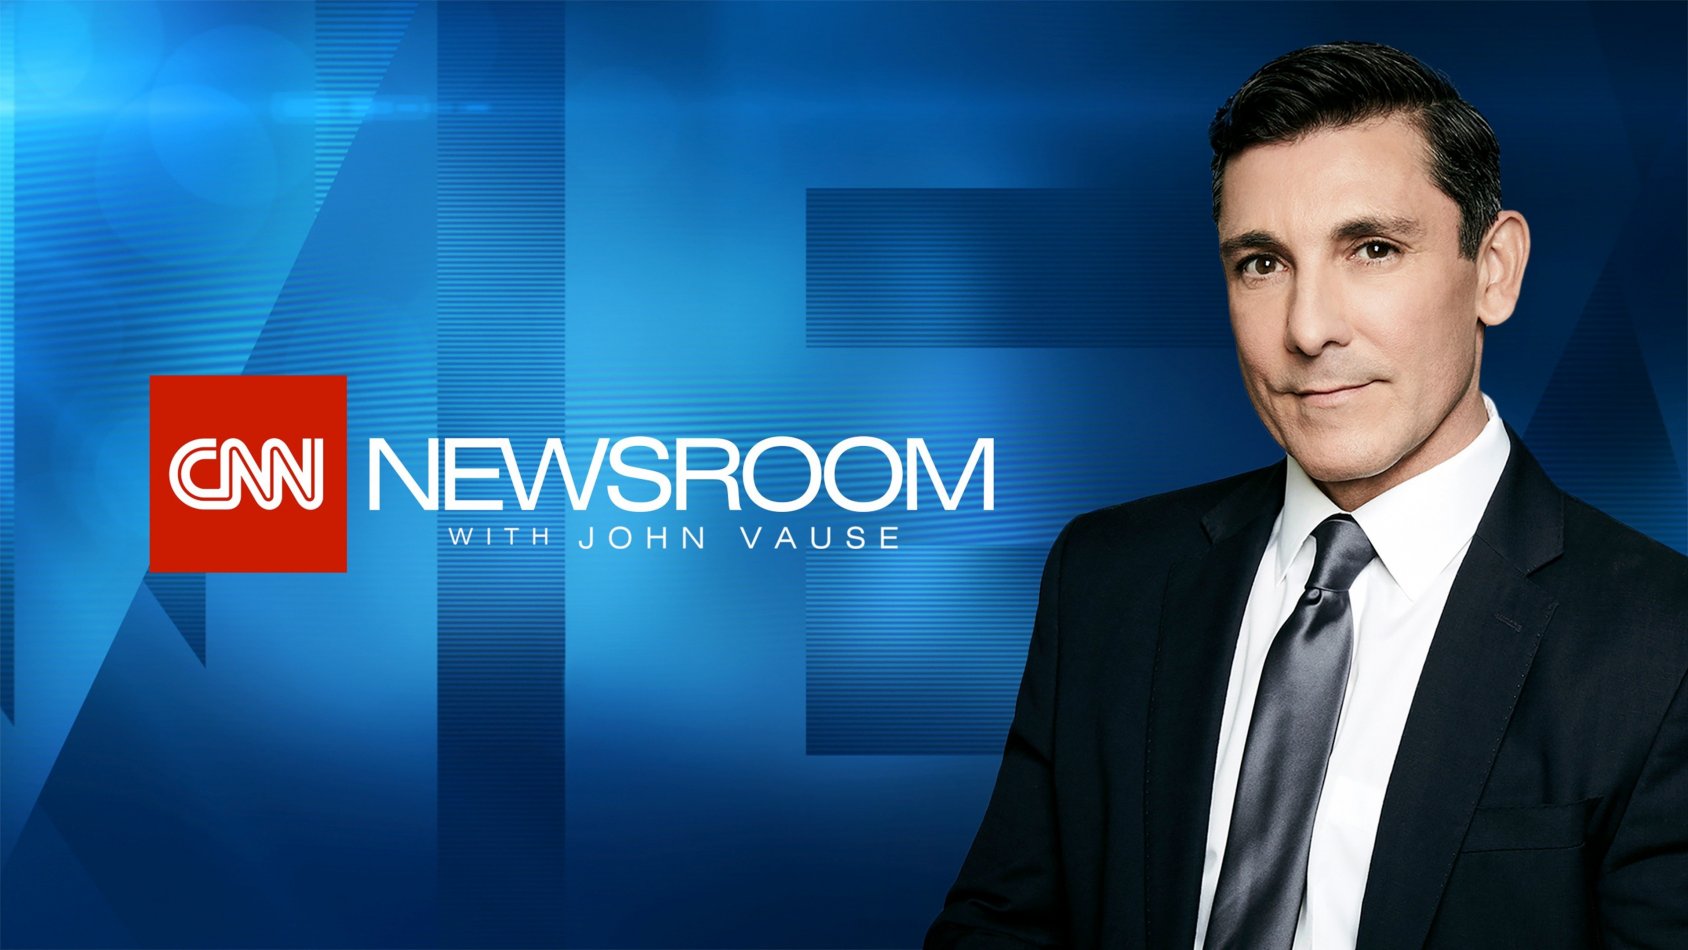 CNN Newsroom with John Vause - Streama online eller via vår app - Tele2 ...